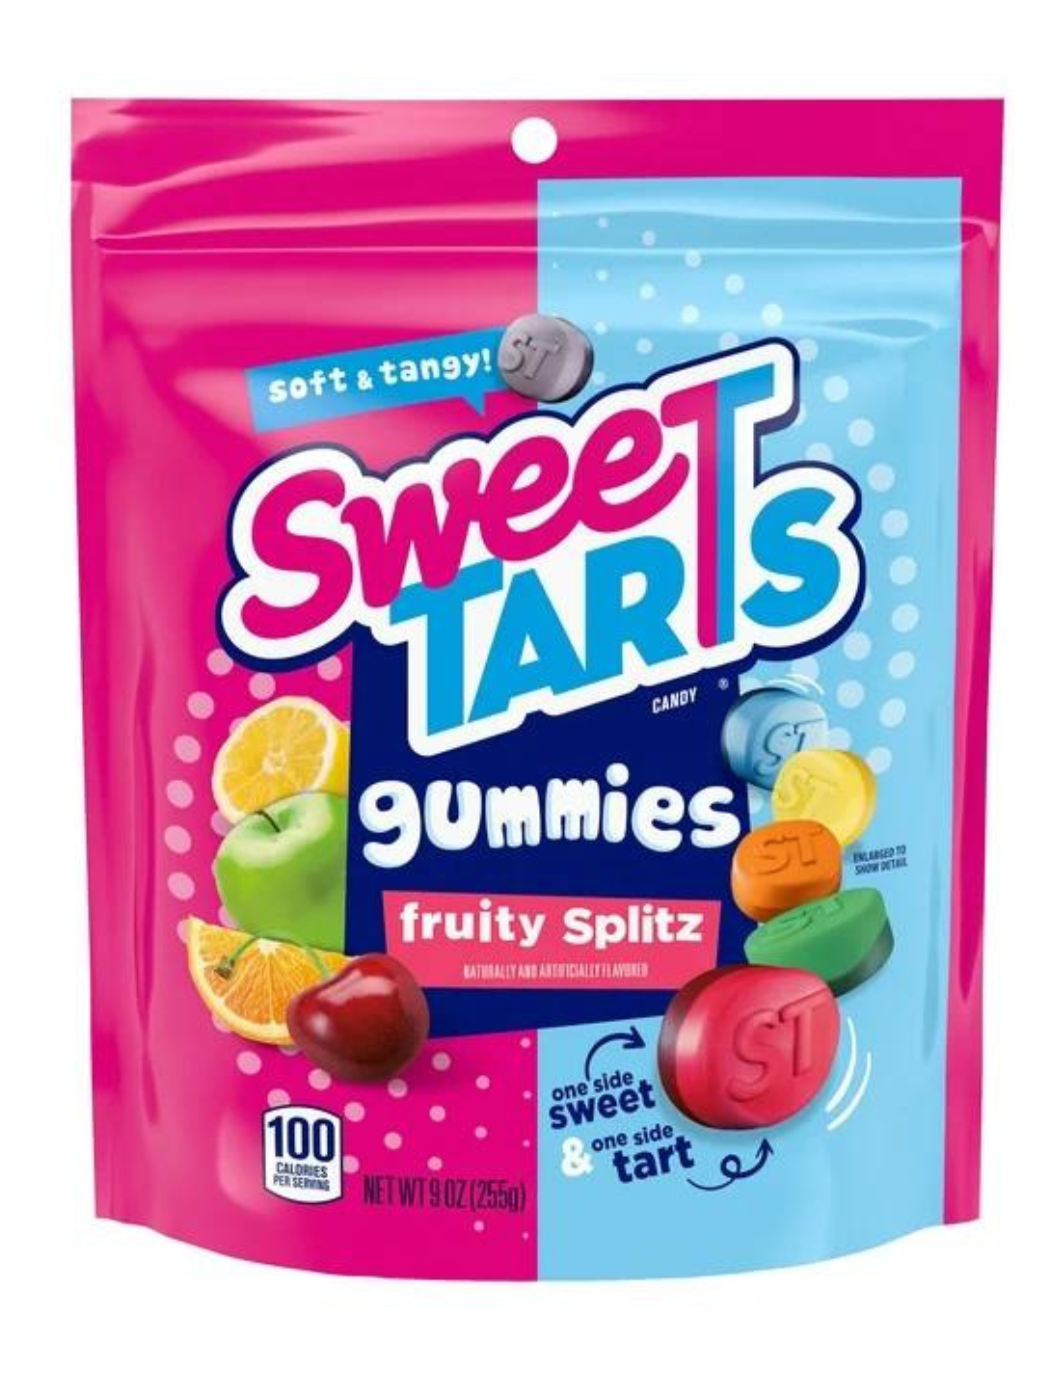 SweeTARTS Gummies Fruity Splitz, Fruit Flavored Gummy Candy, 9 oz Resealable Bag